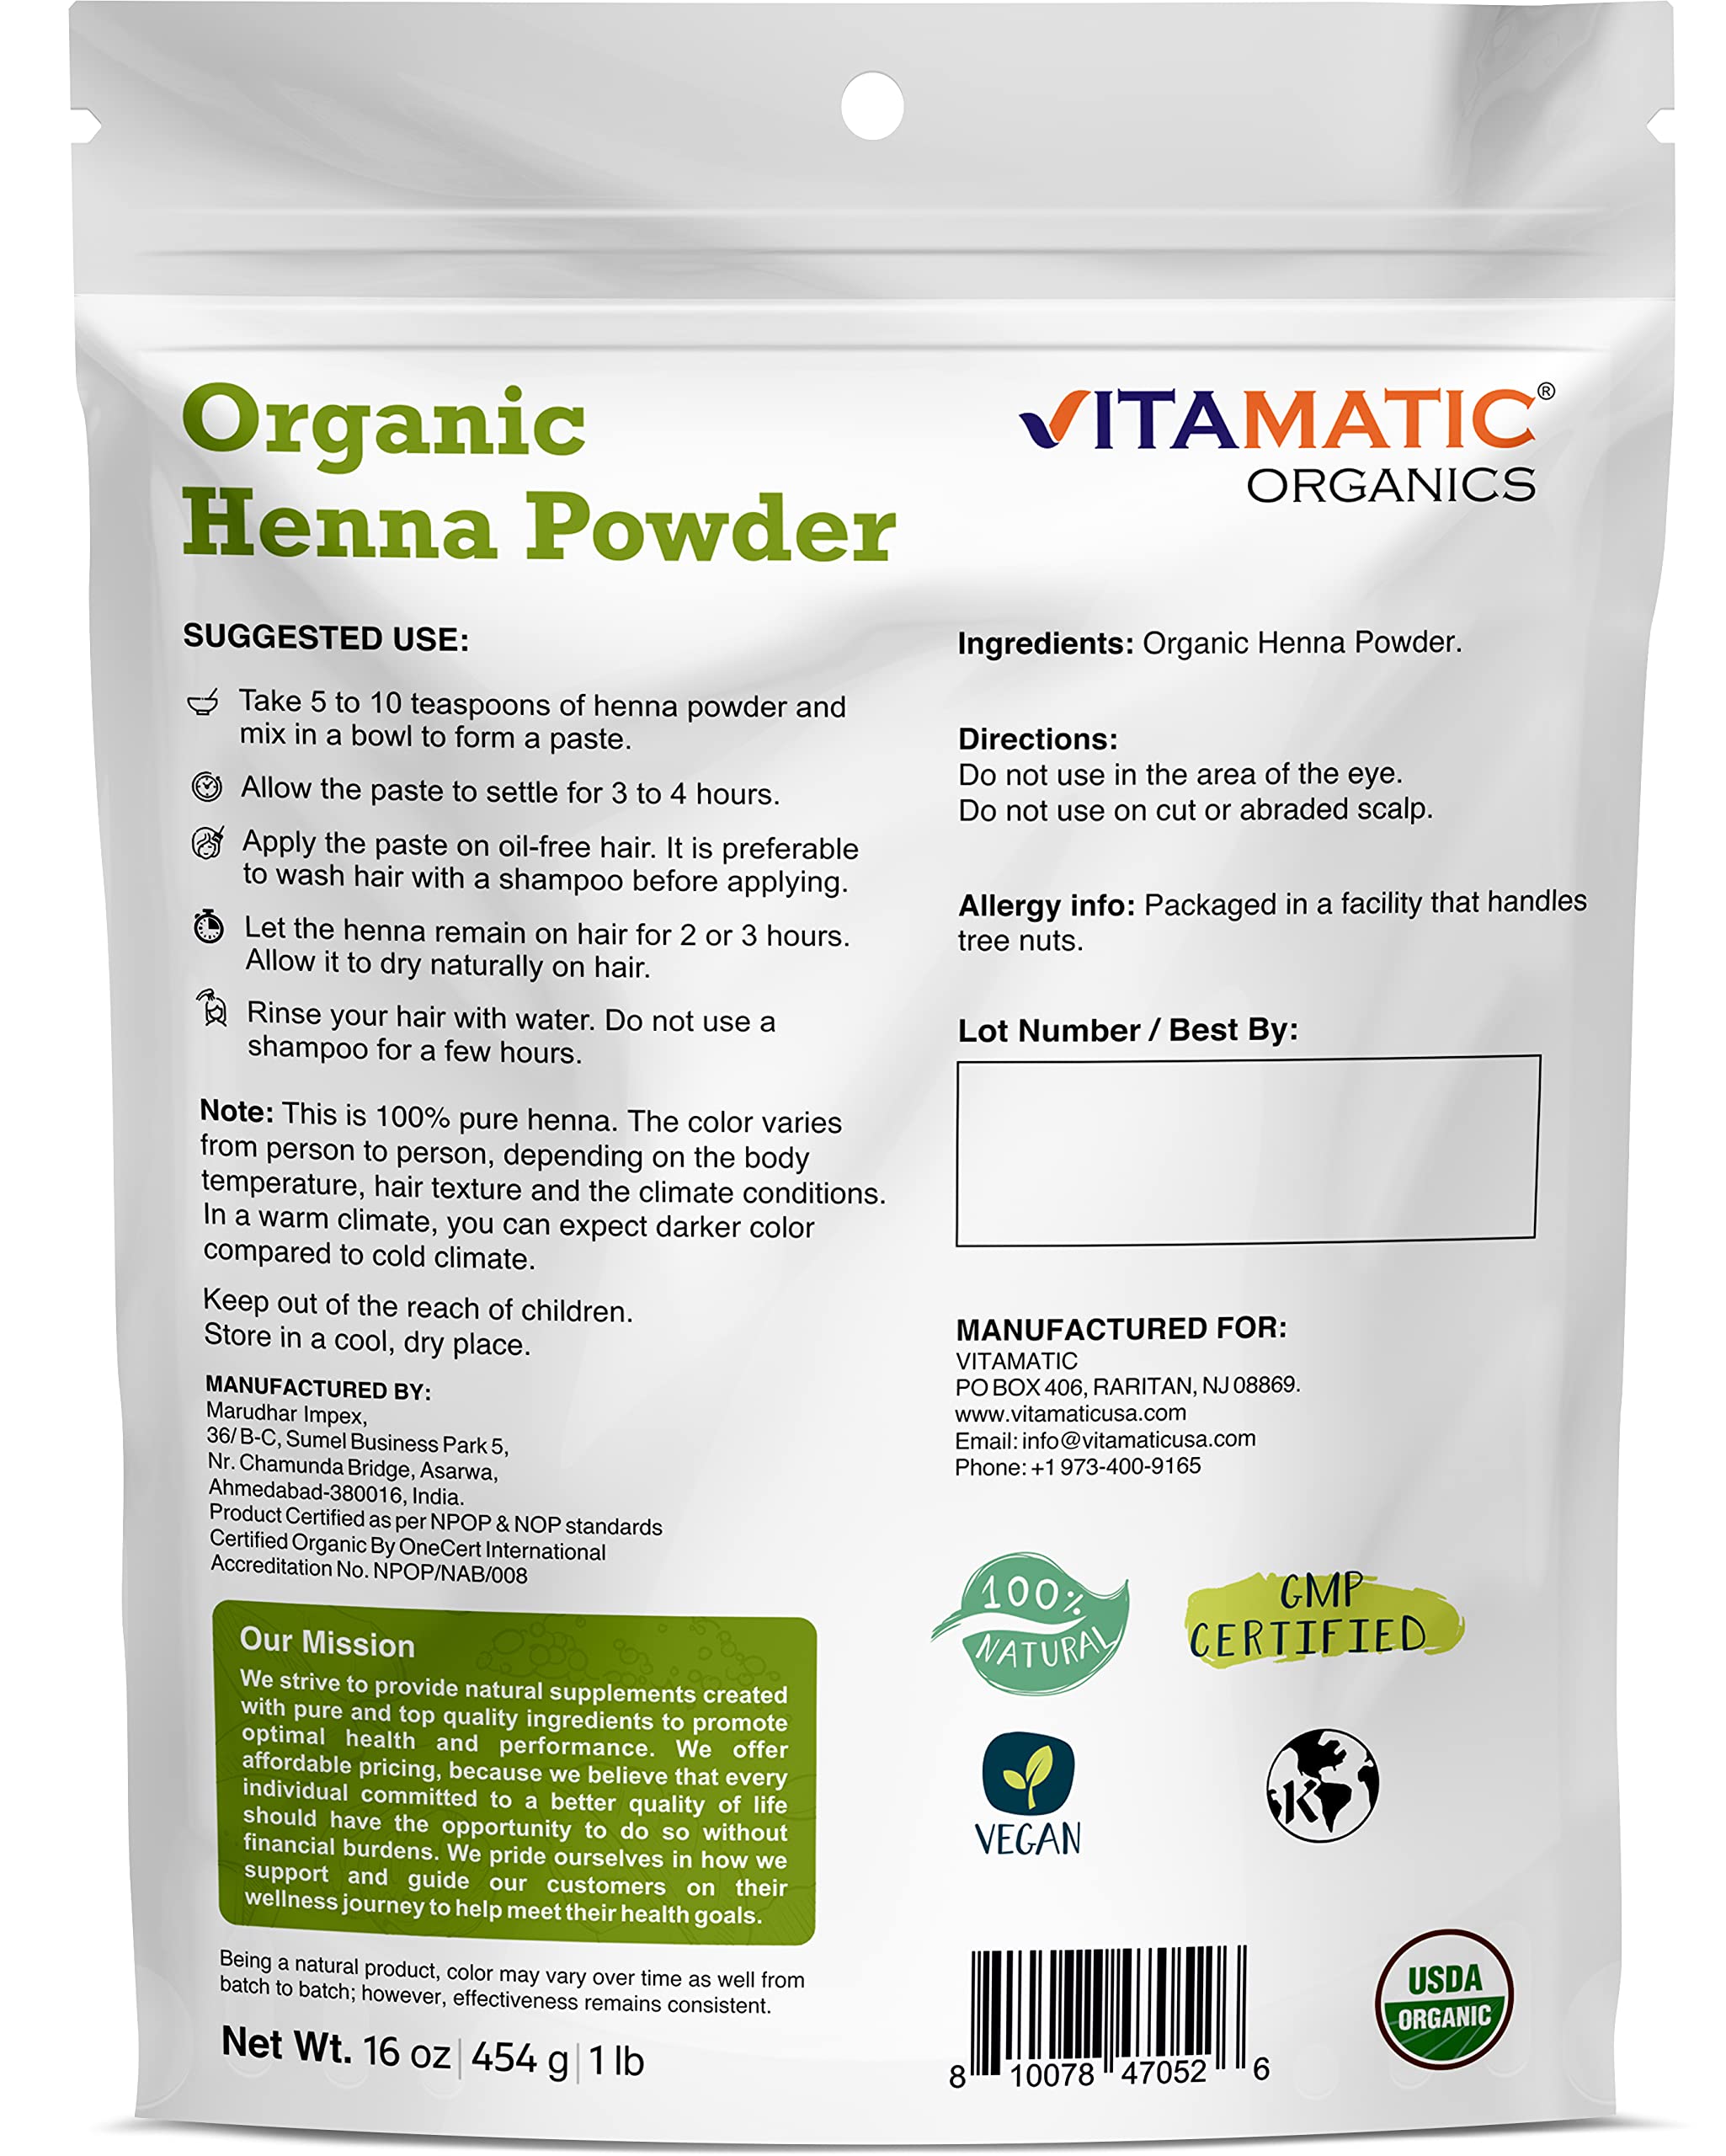 Vitamatic Certified USDA Organic Henna Powder 1 Pound (16 Ounce)